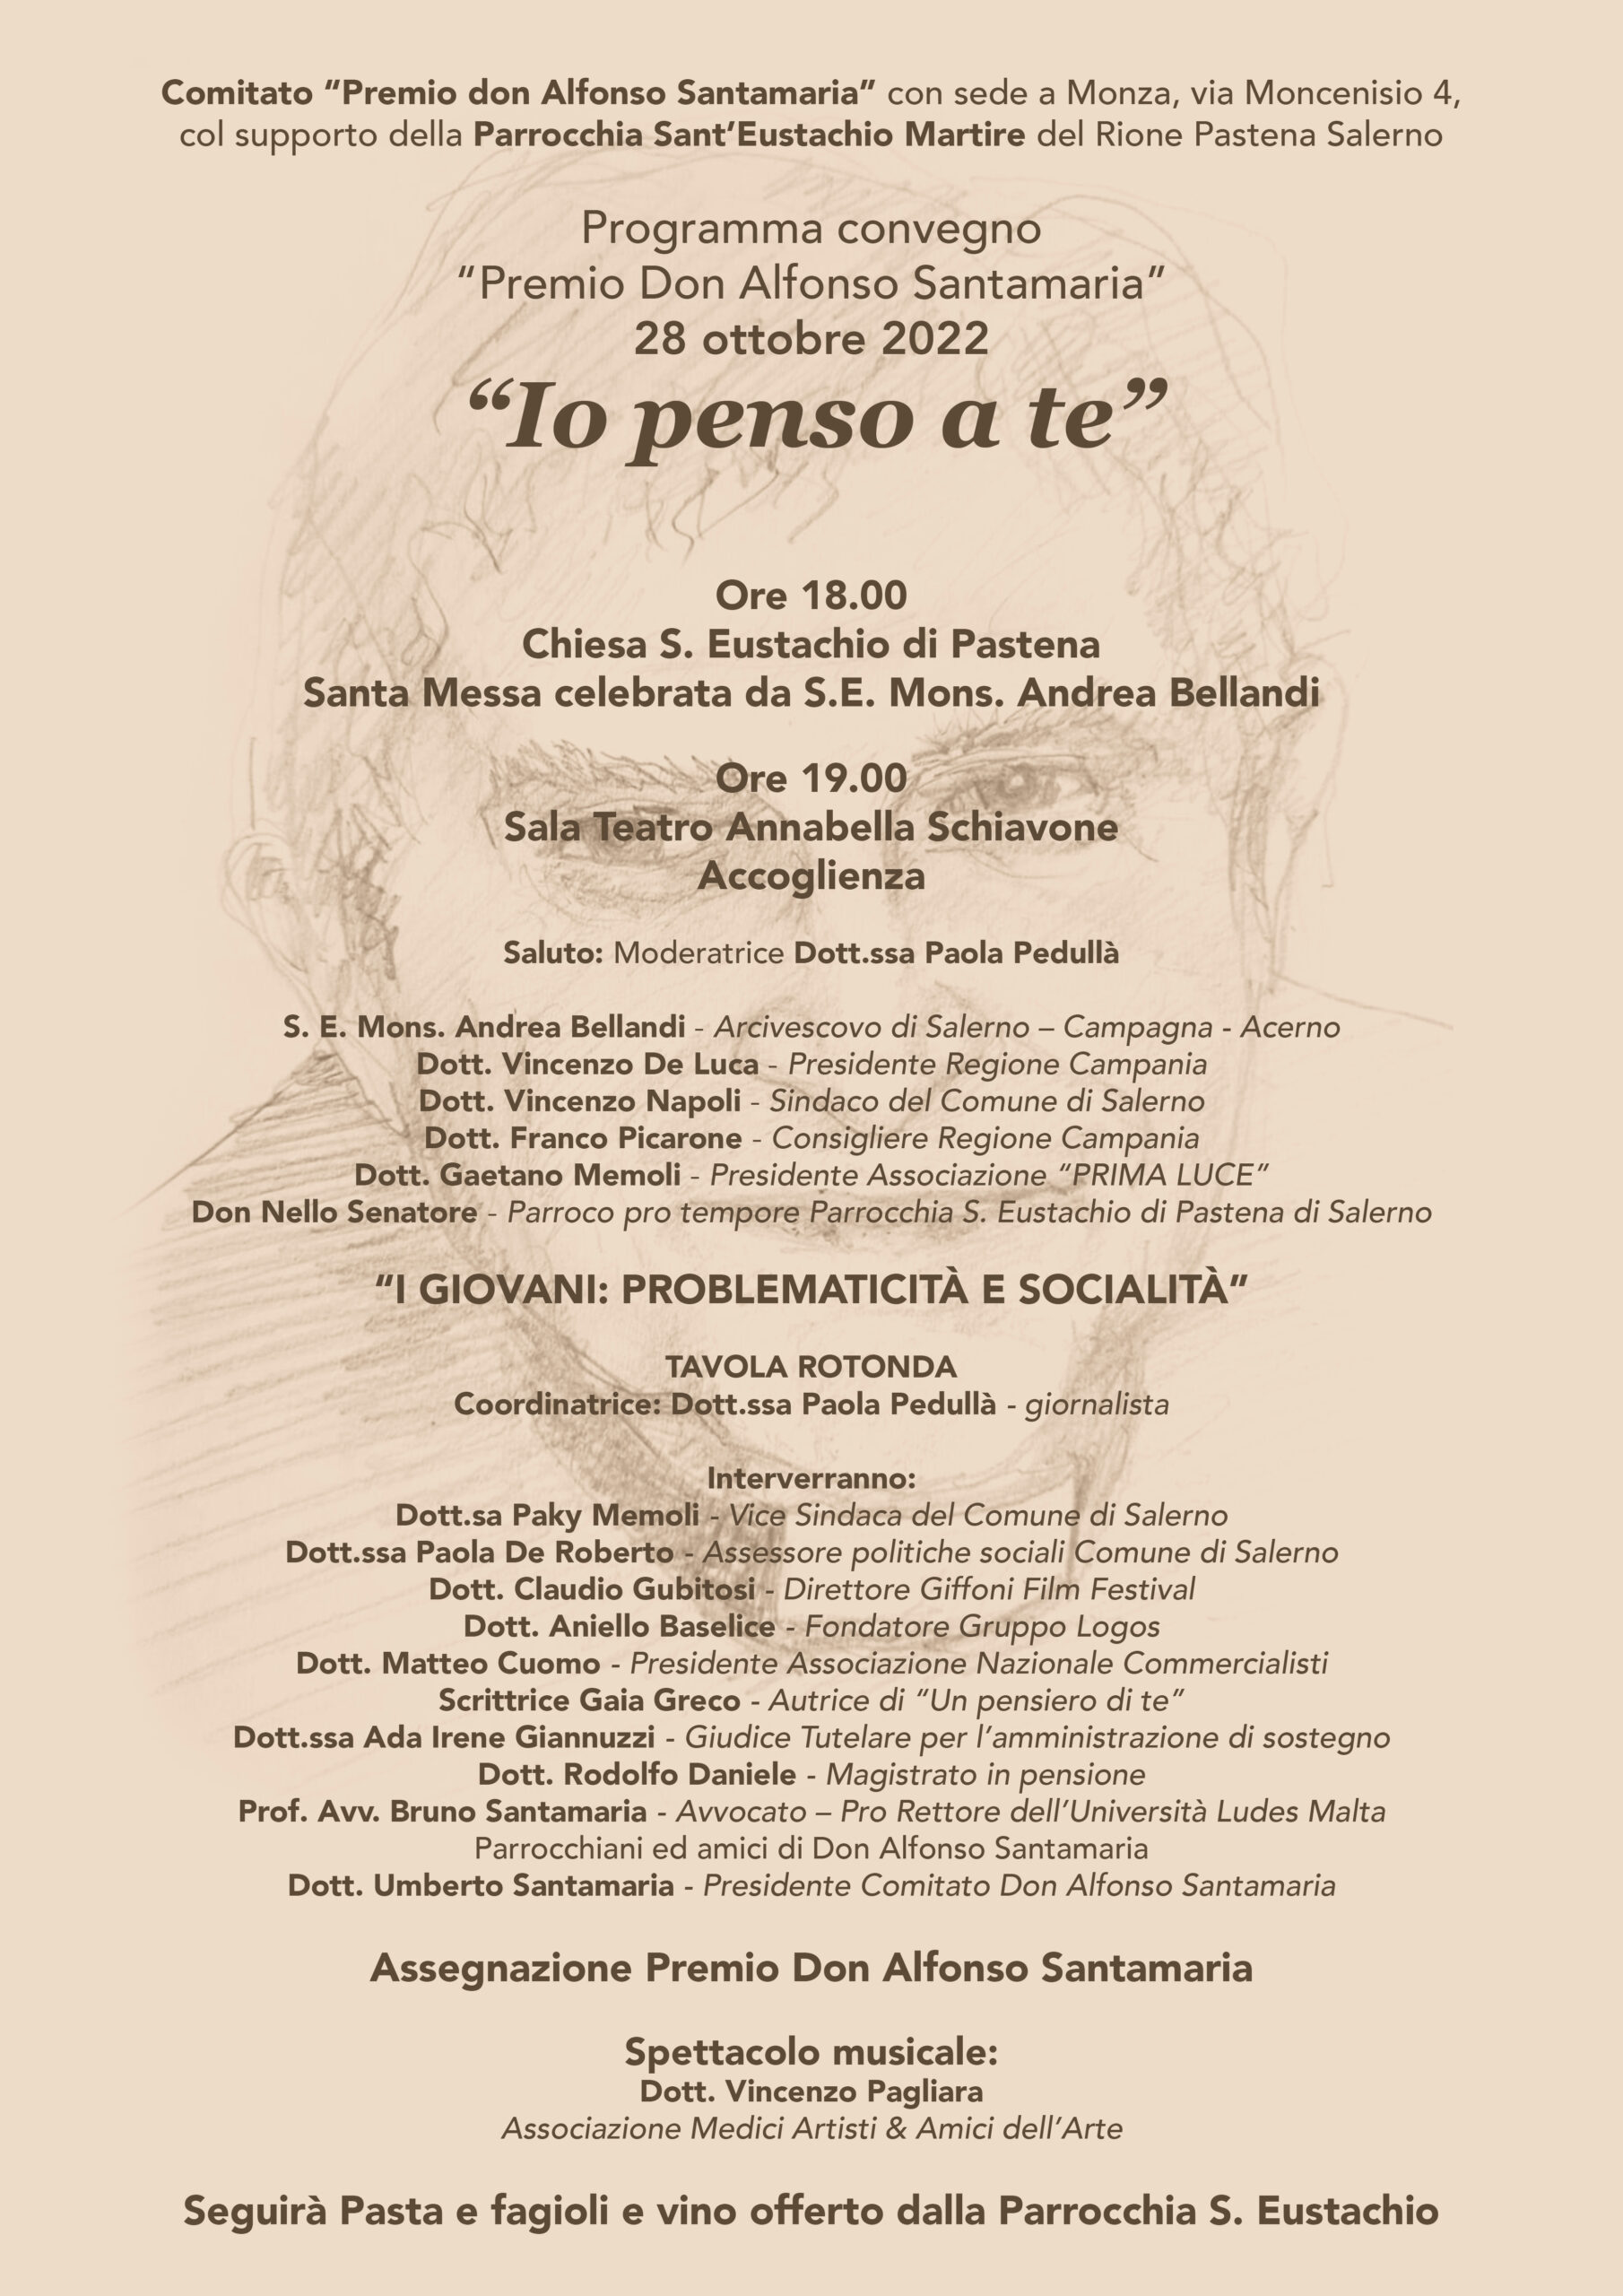 Salerno: Parrocchia Sant’Eustachio “Premio don Alfonso Santamaria” e convegno